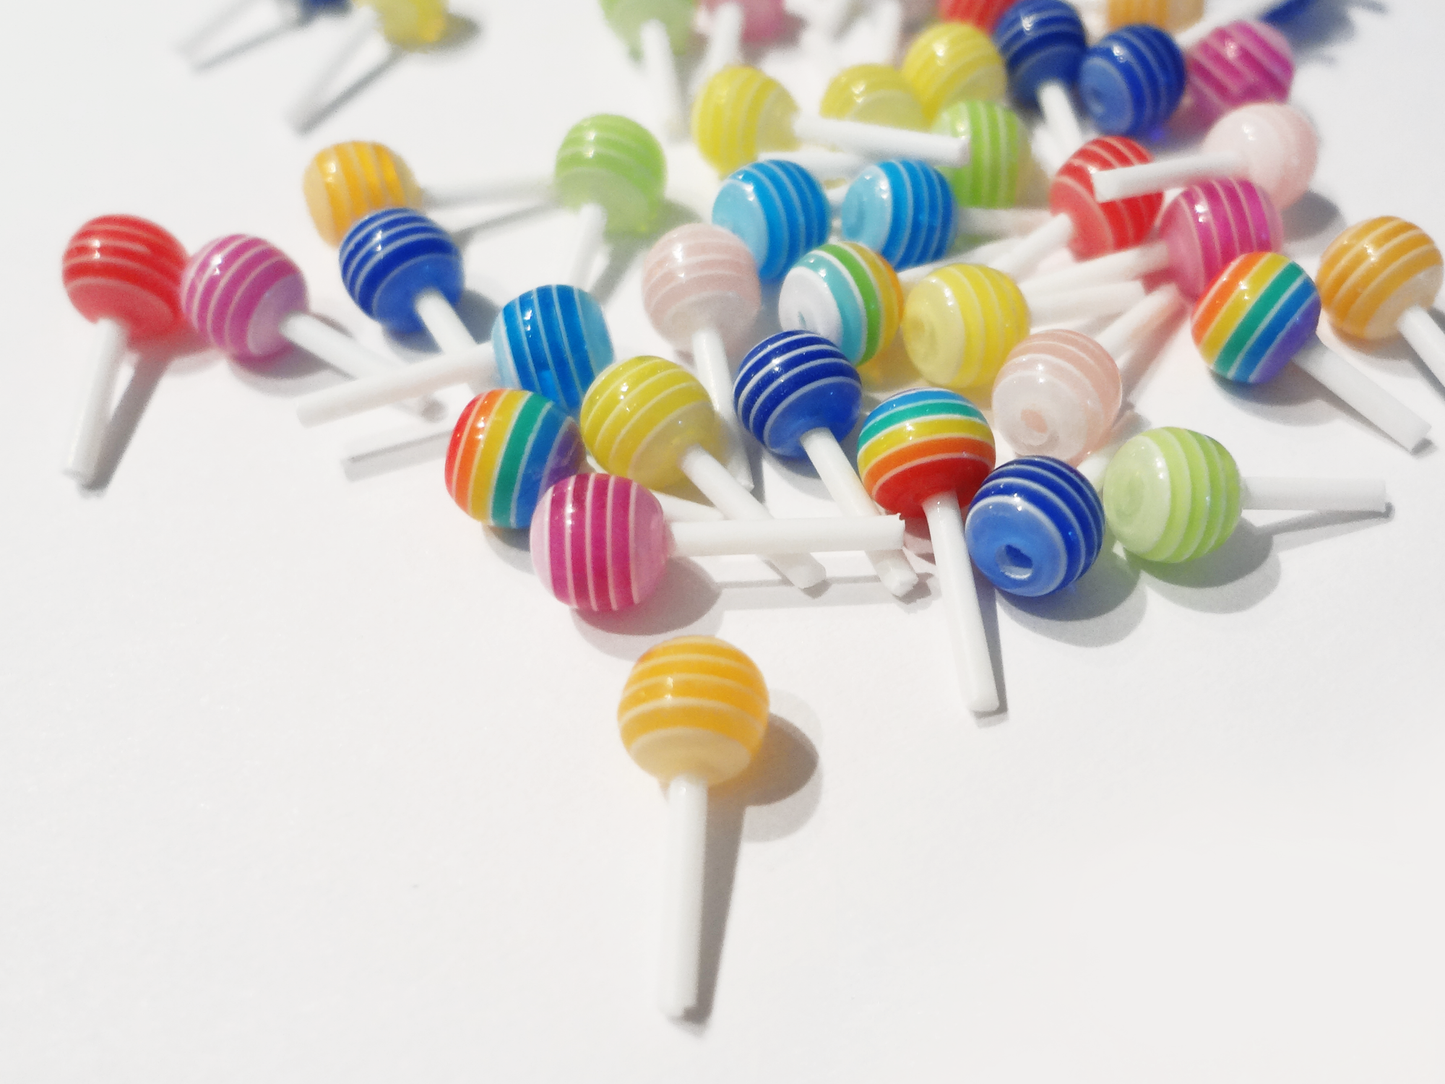 4mm x approx 10mm 3D Candy Lollipops